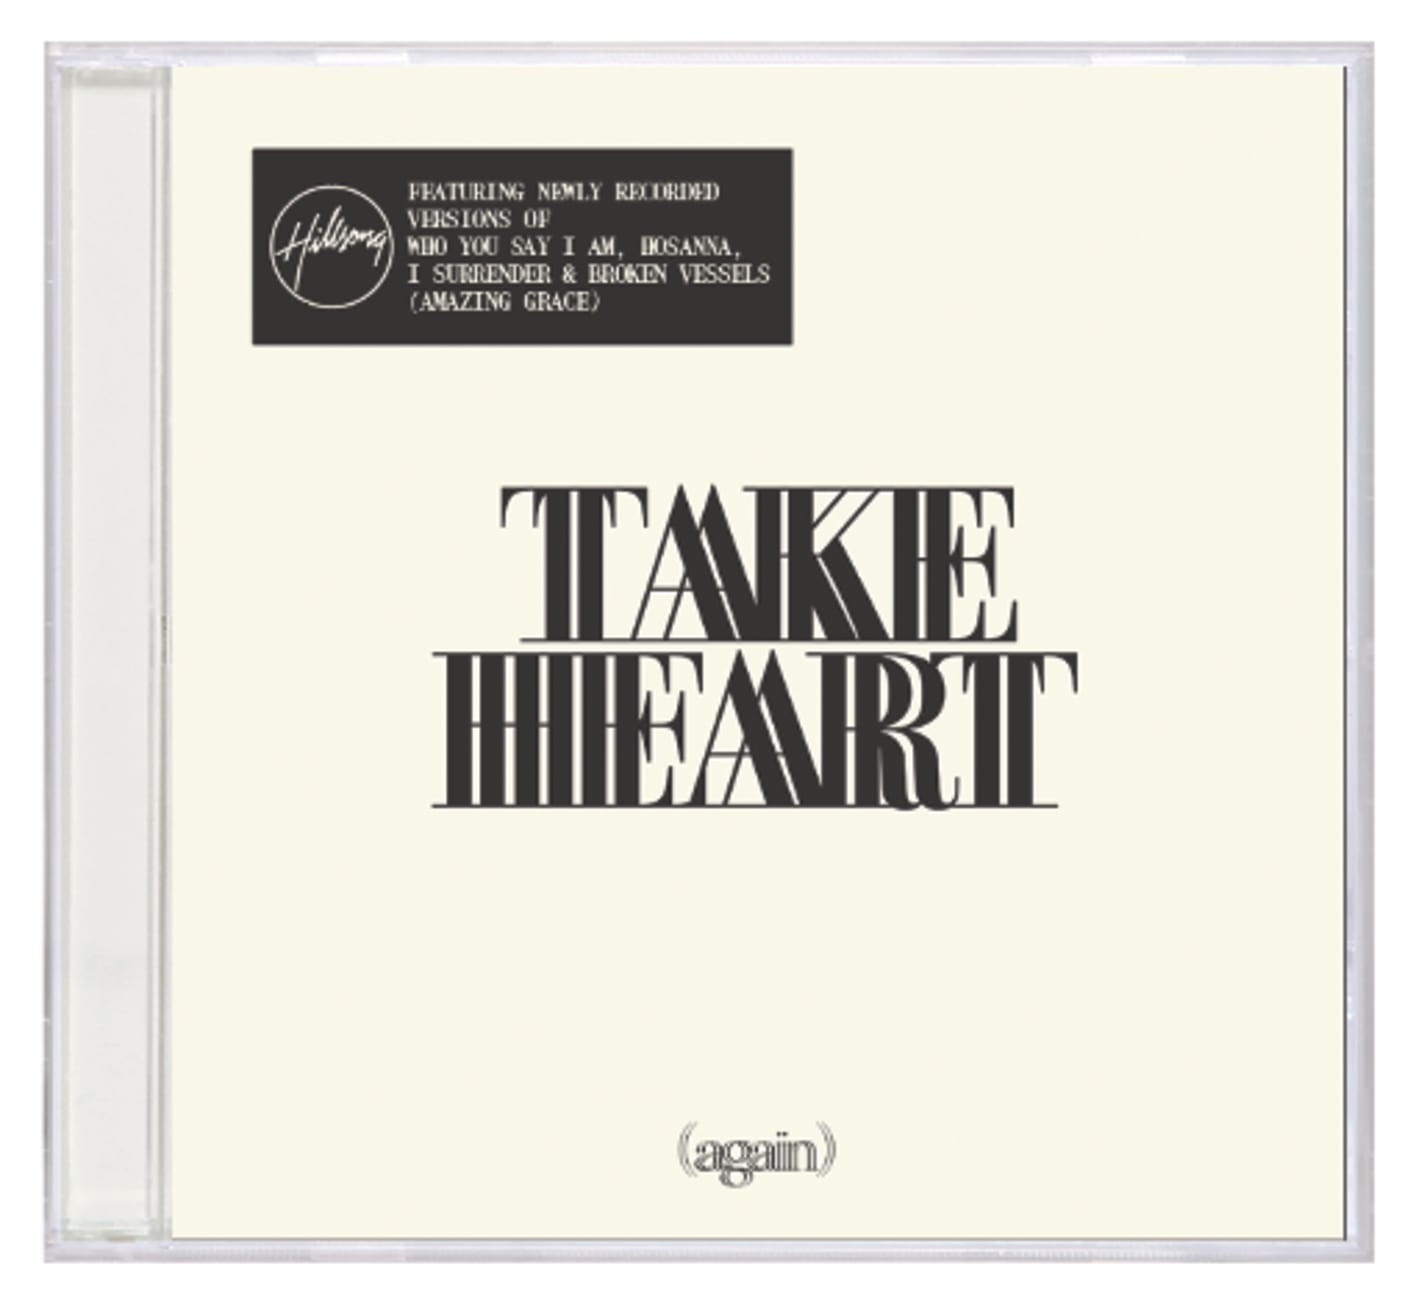 Take Heart (Again) Compact Disc